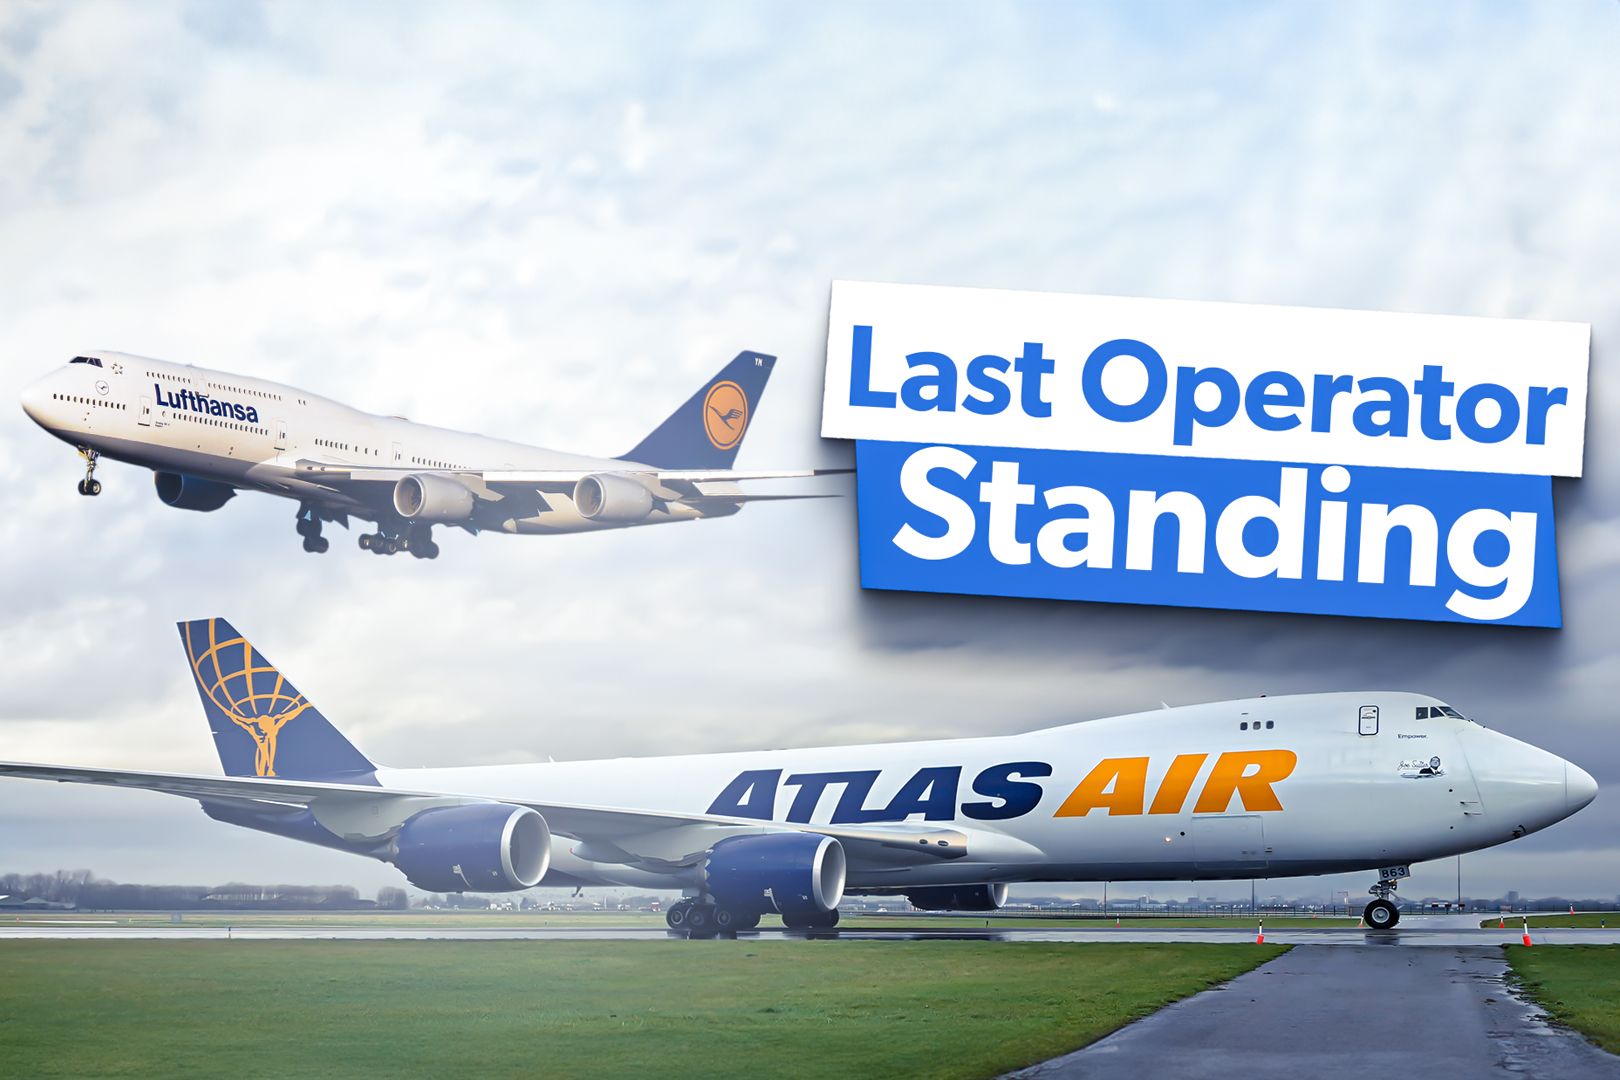 Lufthansa and Atlas Air Boeing 747s.